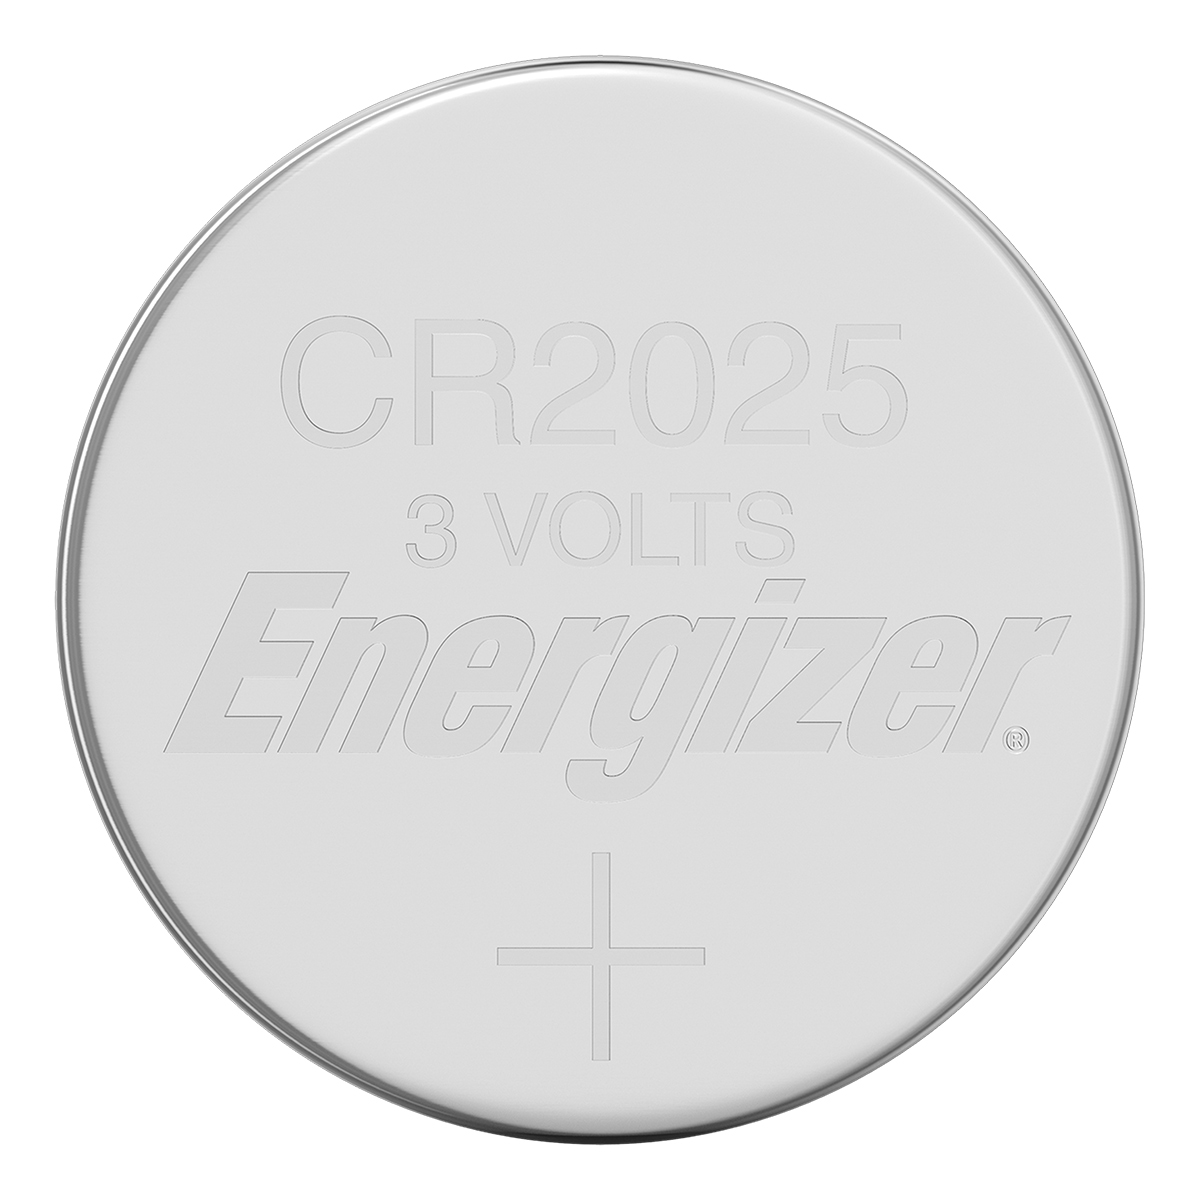 Energizer Lithiumbatterien CR2025